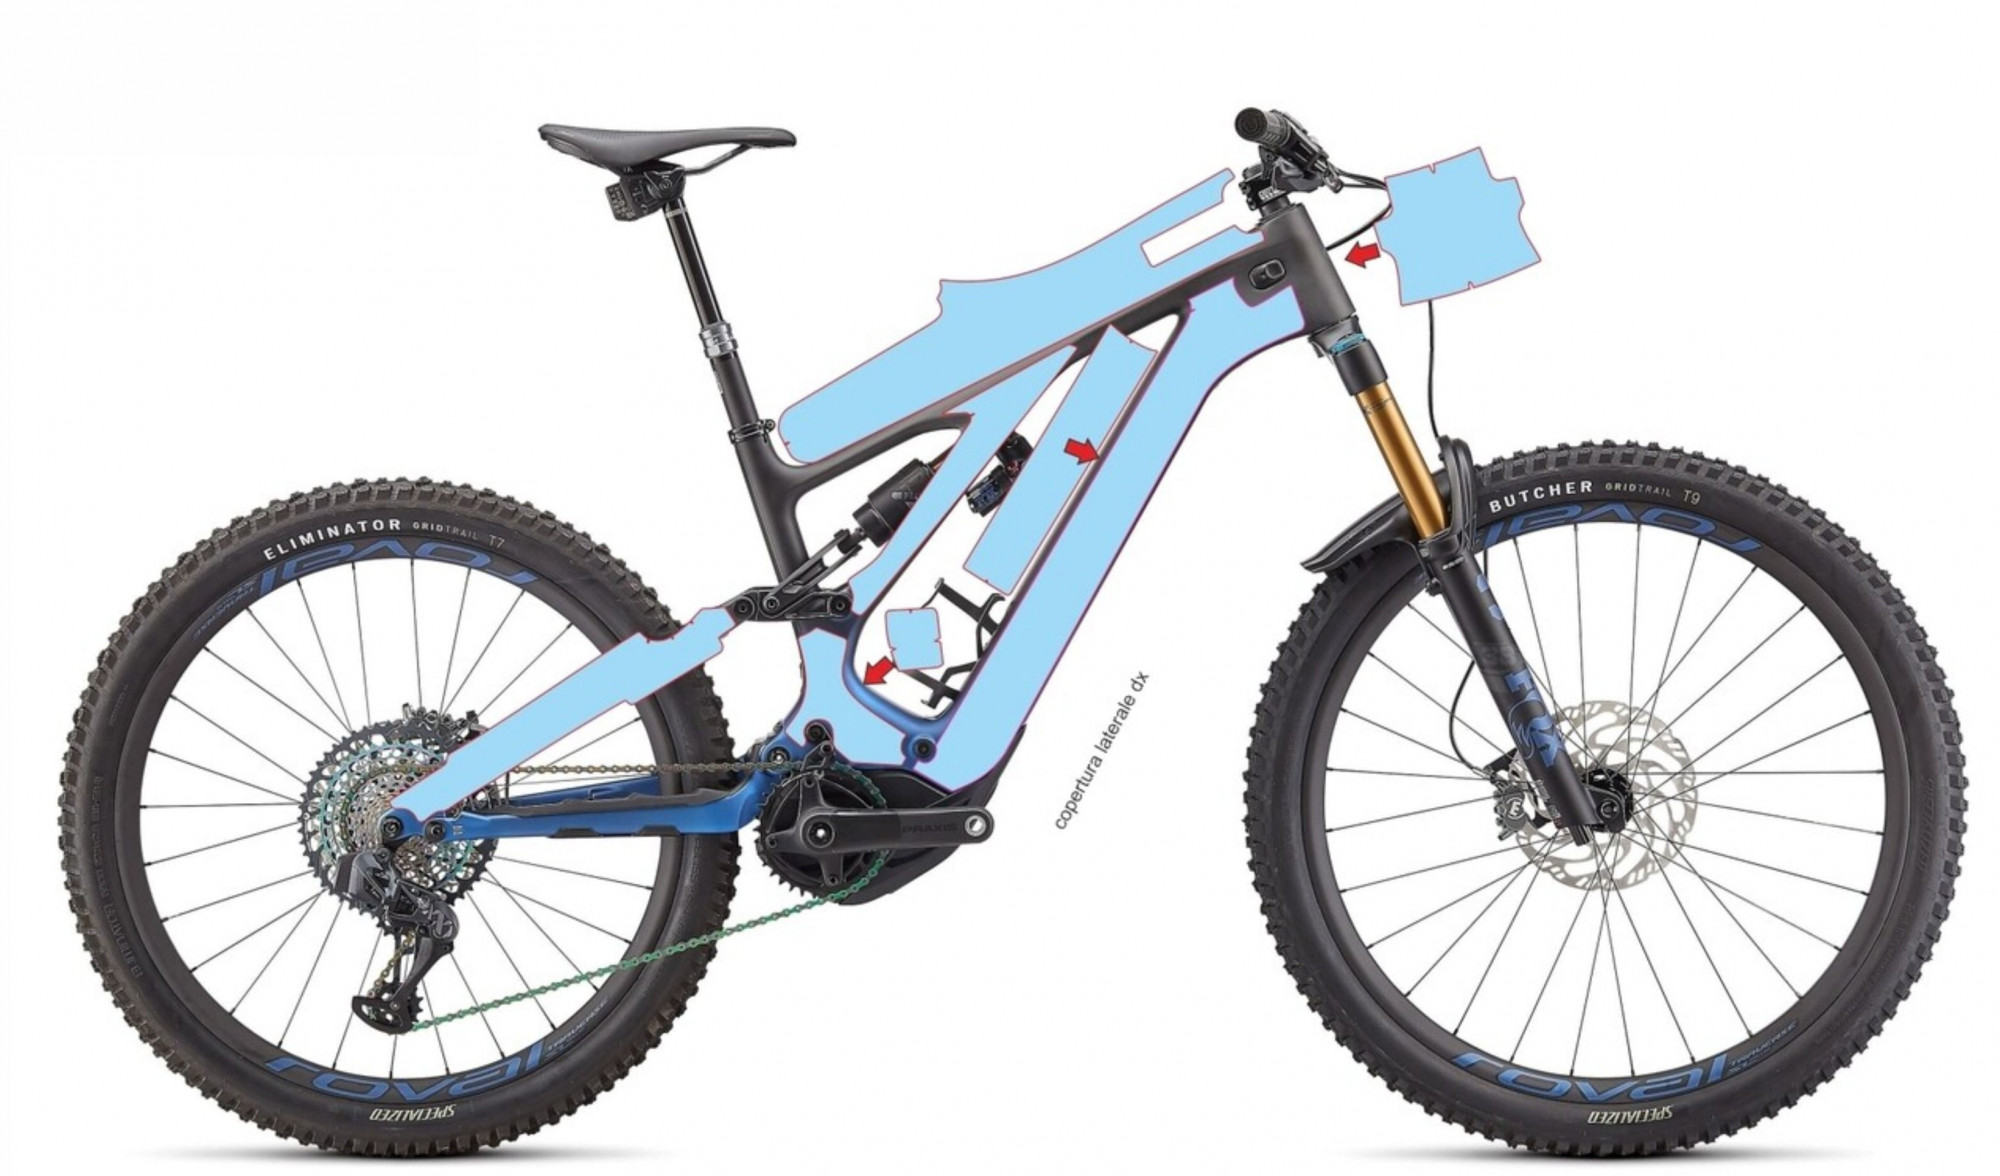 Protector cuadro carbono personalizado - adhesivo - pegatina - bicicleta -  vinilo